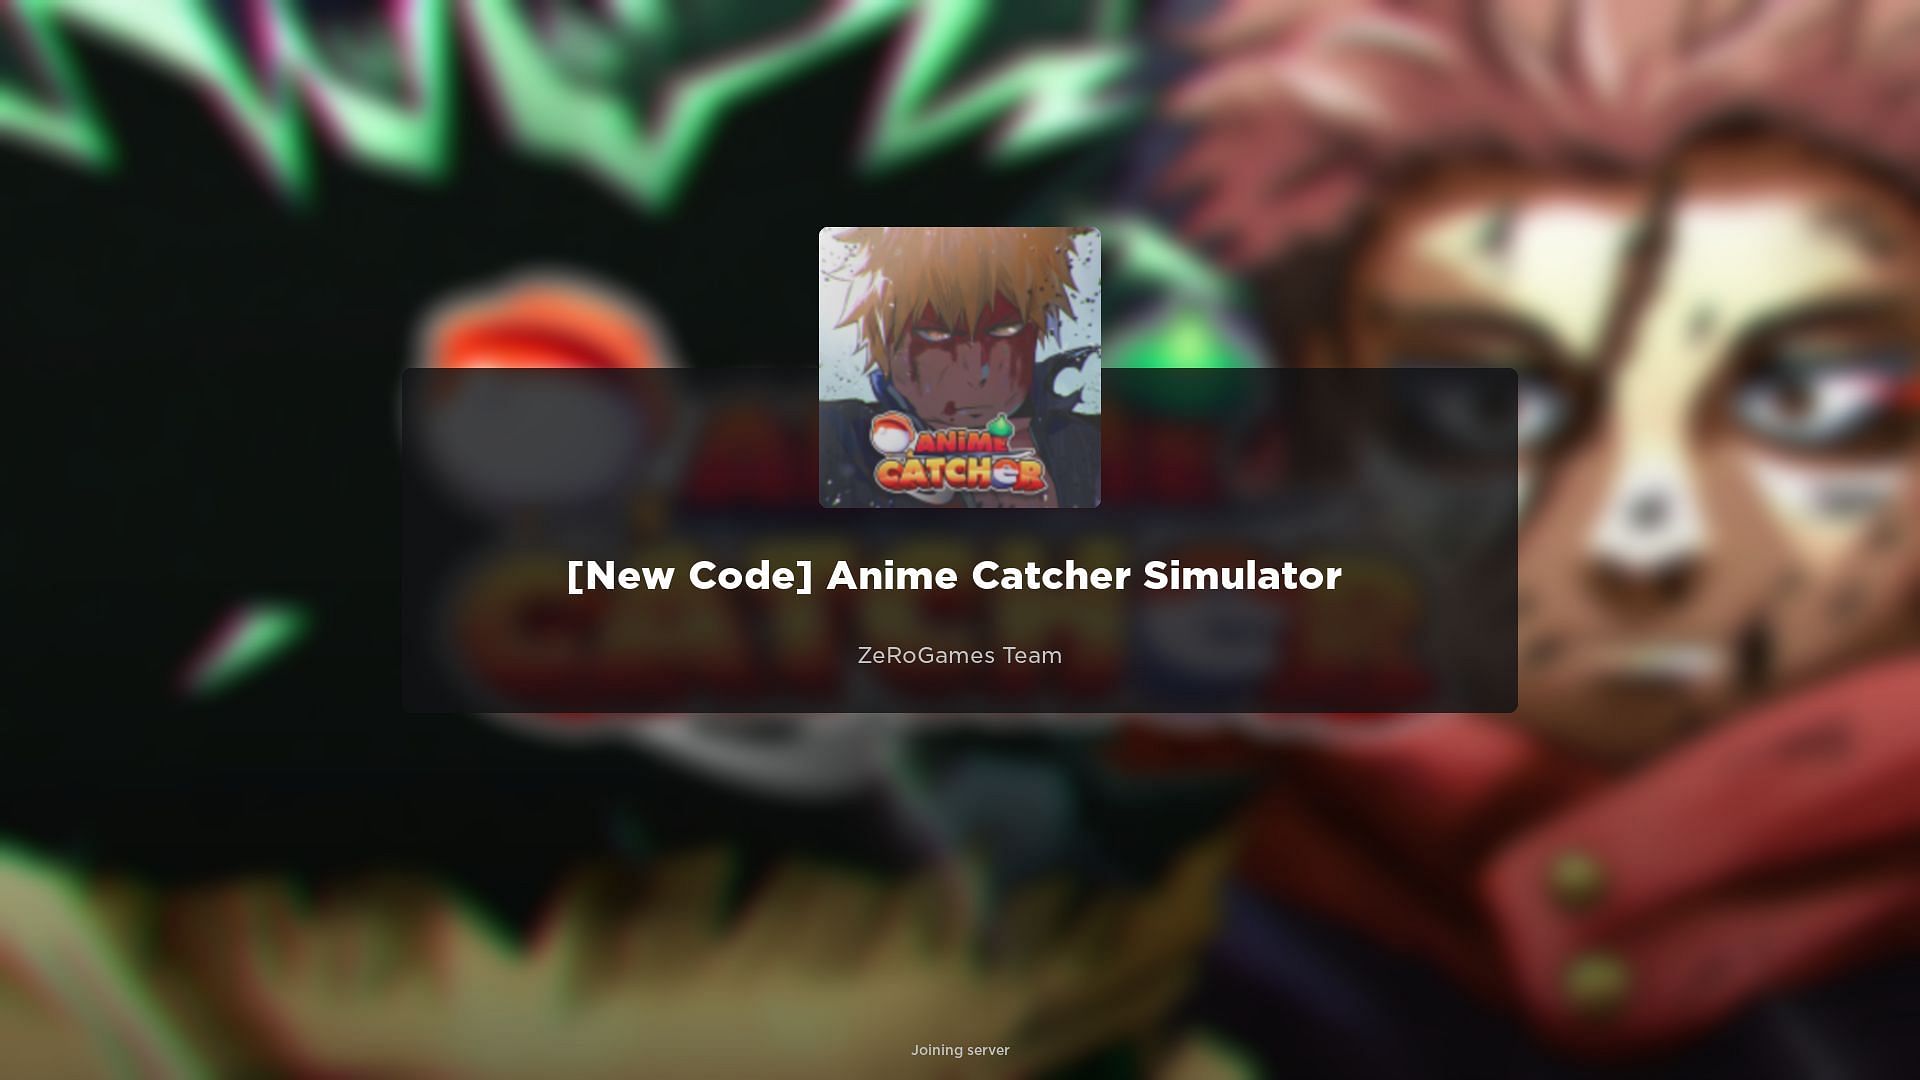 Redeem Codes in Anime Catcher Simulator